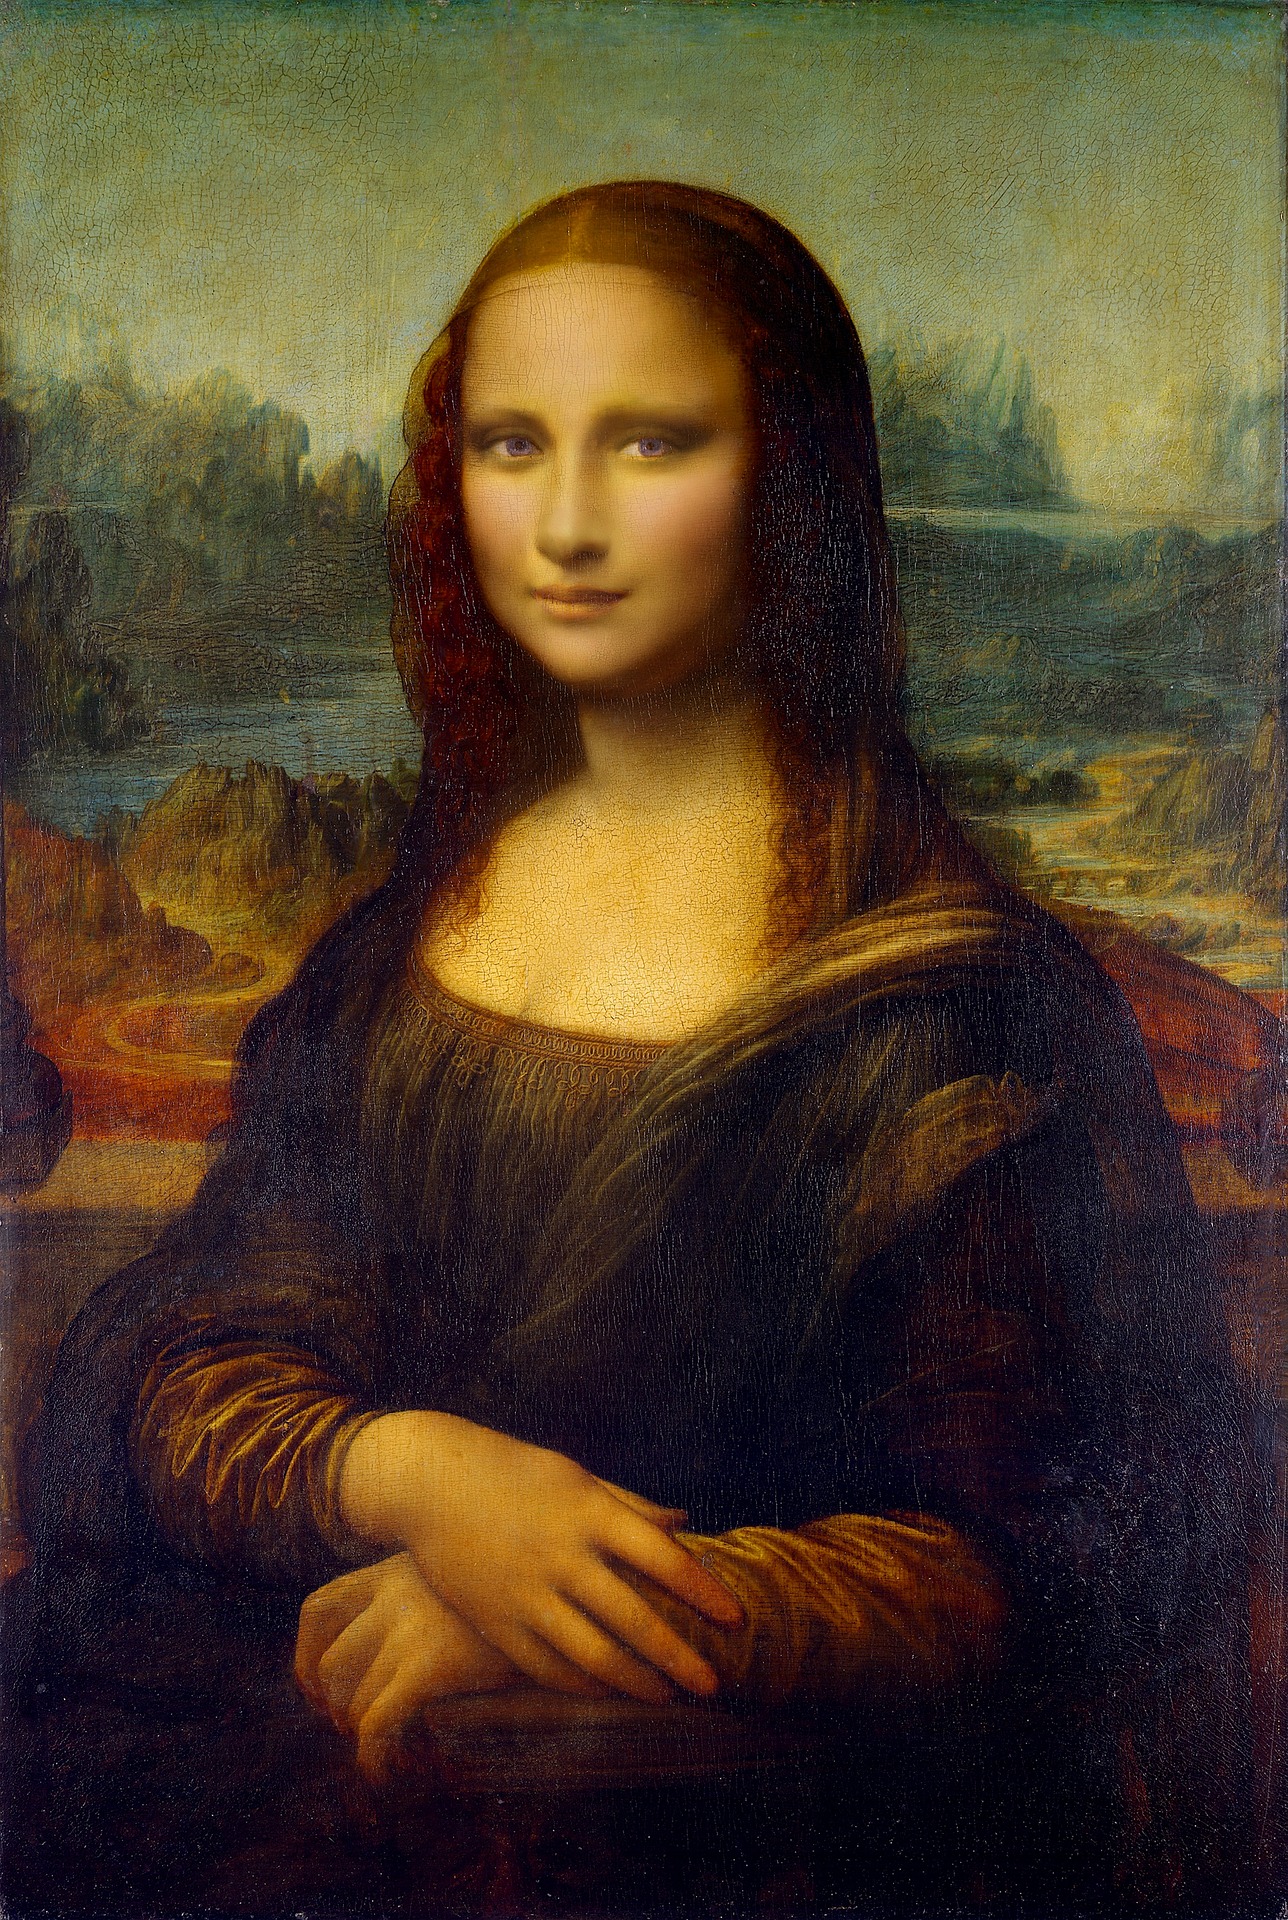 Mona Lisa (Zdroj: https://pixabay.com/en/mona-lisa-painting-leonardo-da-vinci-1846585/)